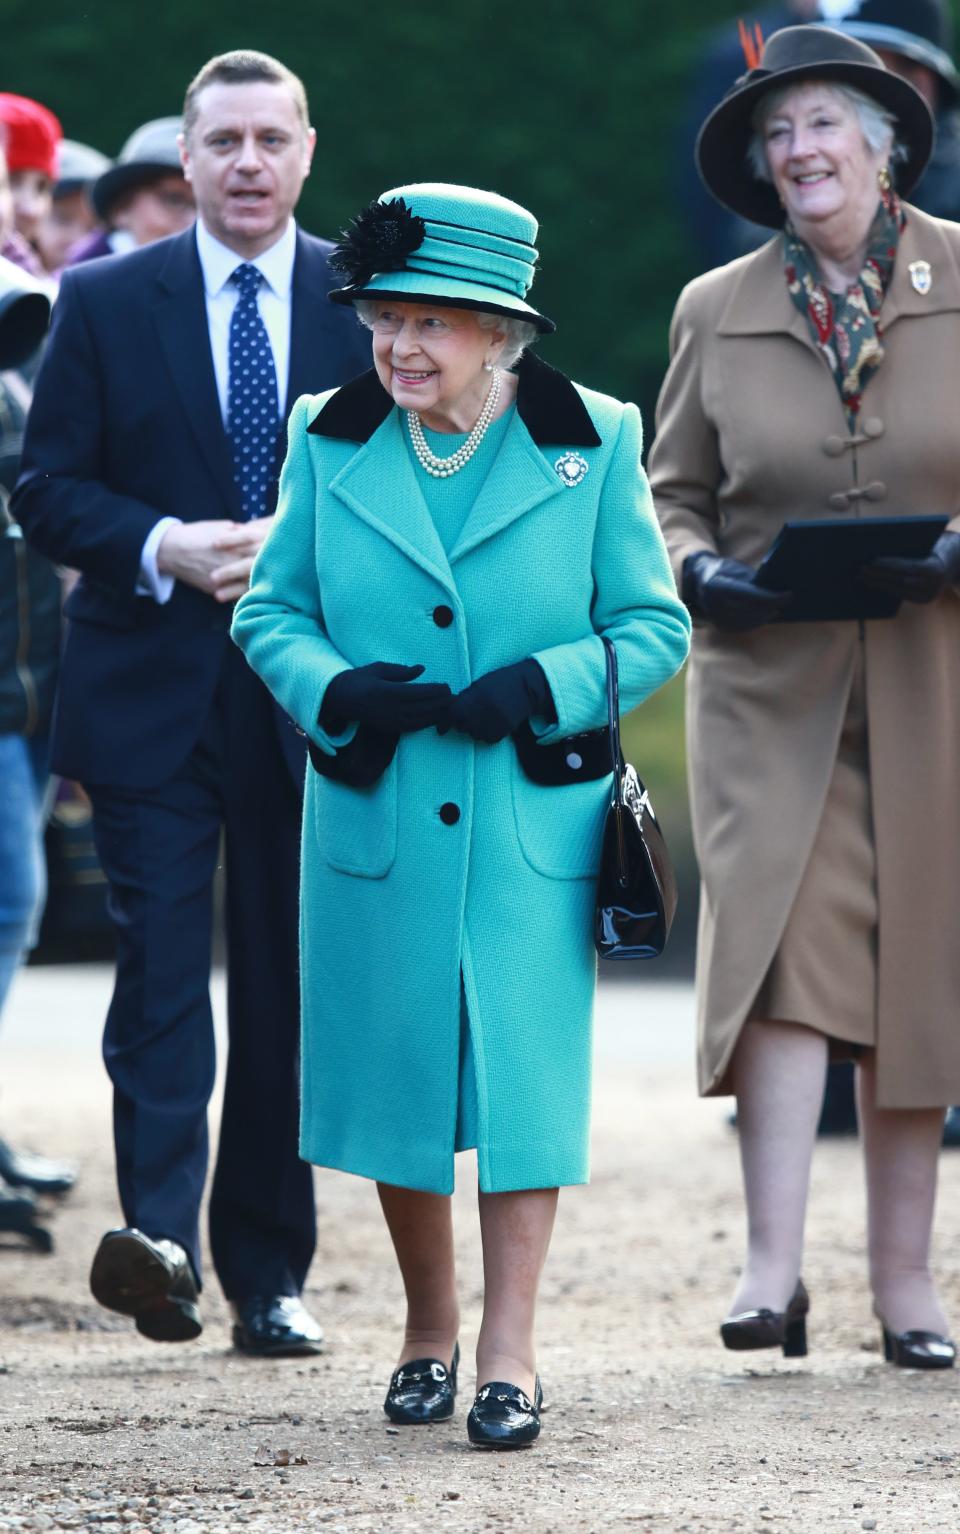 Discrete signals and Clarins lipstick: the secrets of The Queen's handbag revealed